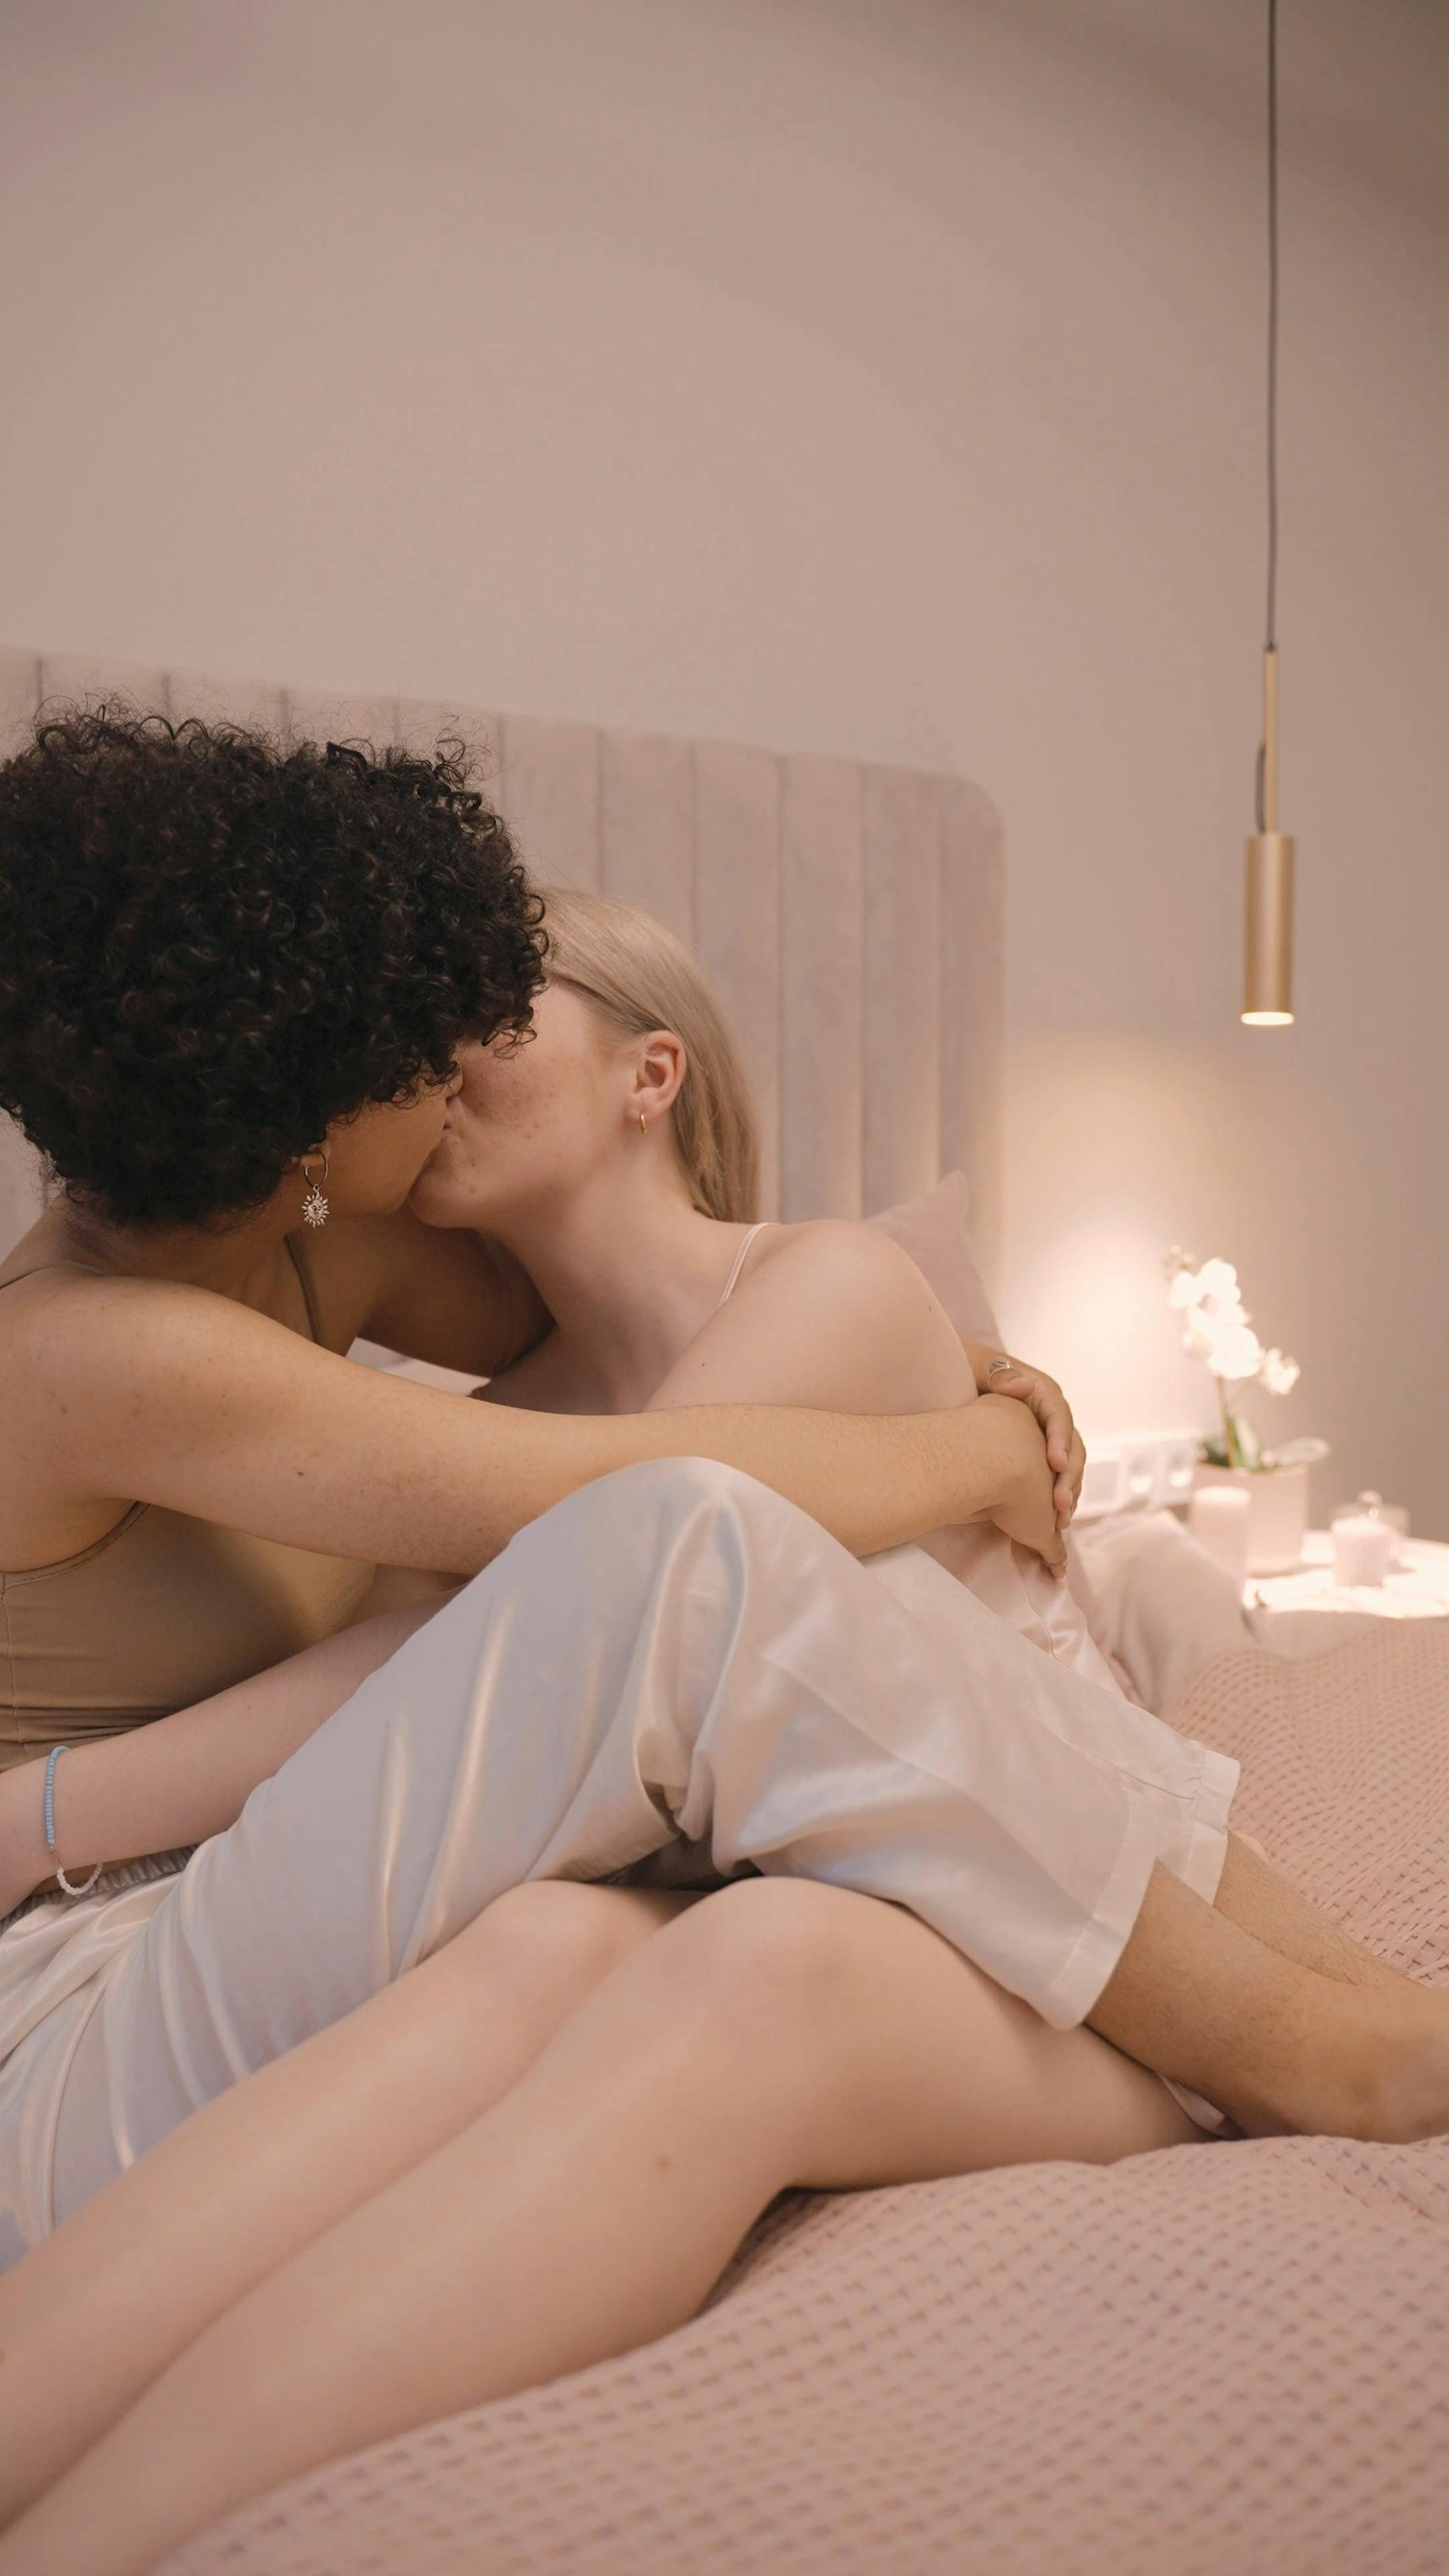 amanda schmitt add photo chicas lesbianas videos gratis